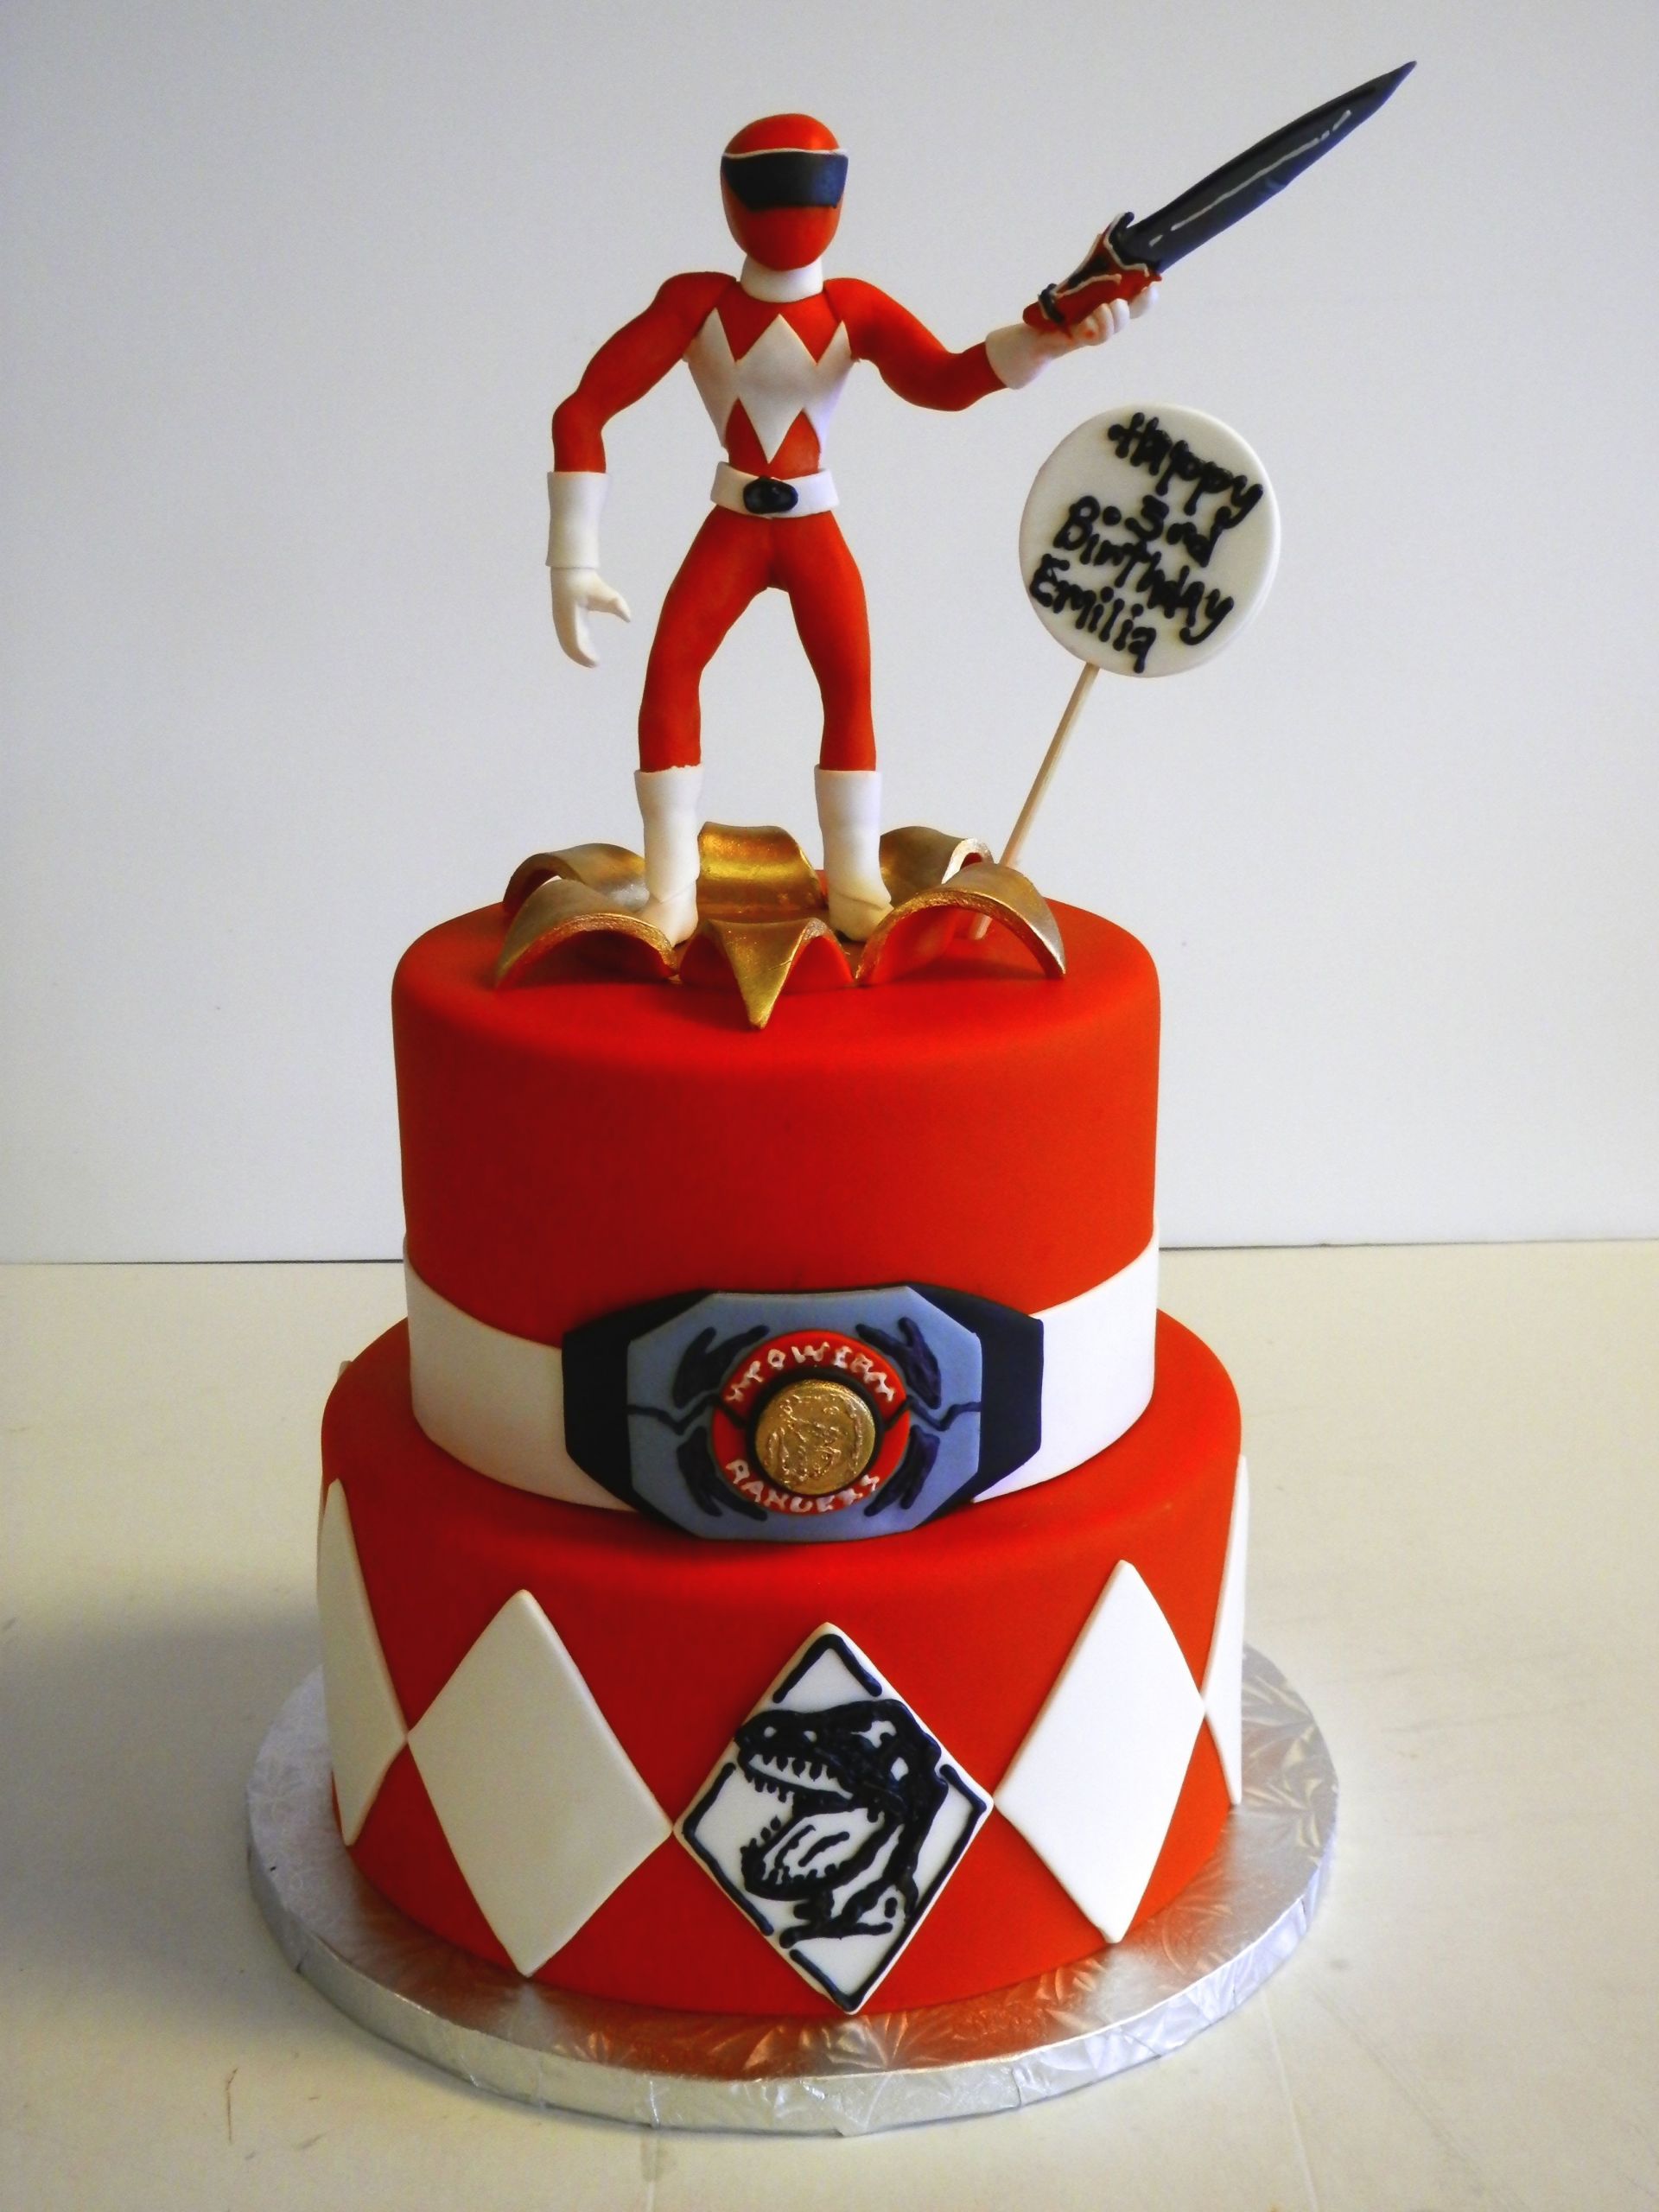 Power Ranger Birthday Cakes
 PowerRangers birthday cake RedRanger MightyMorphin